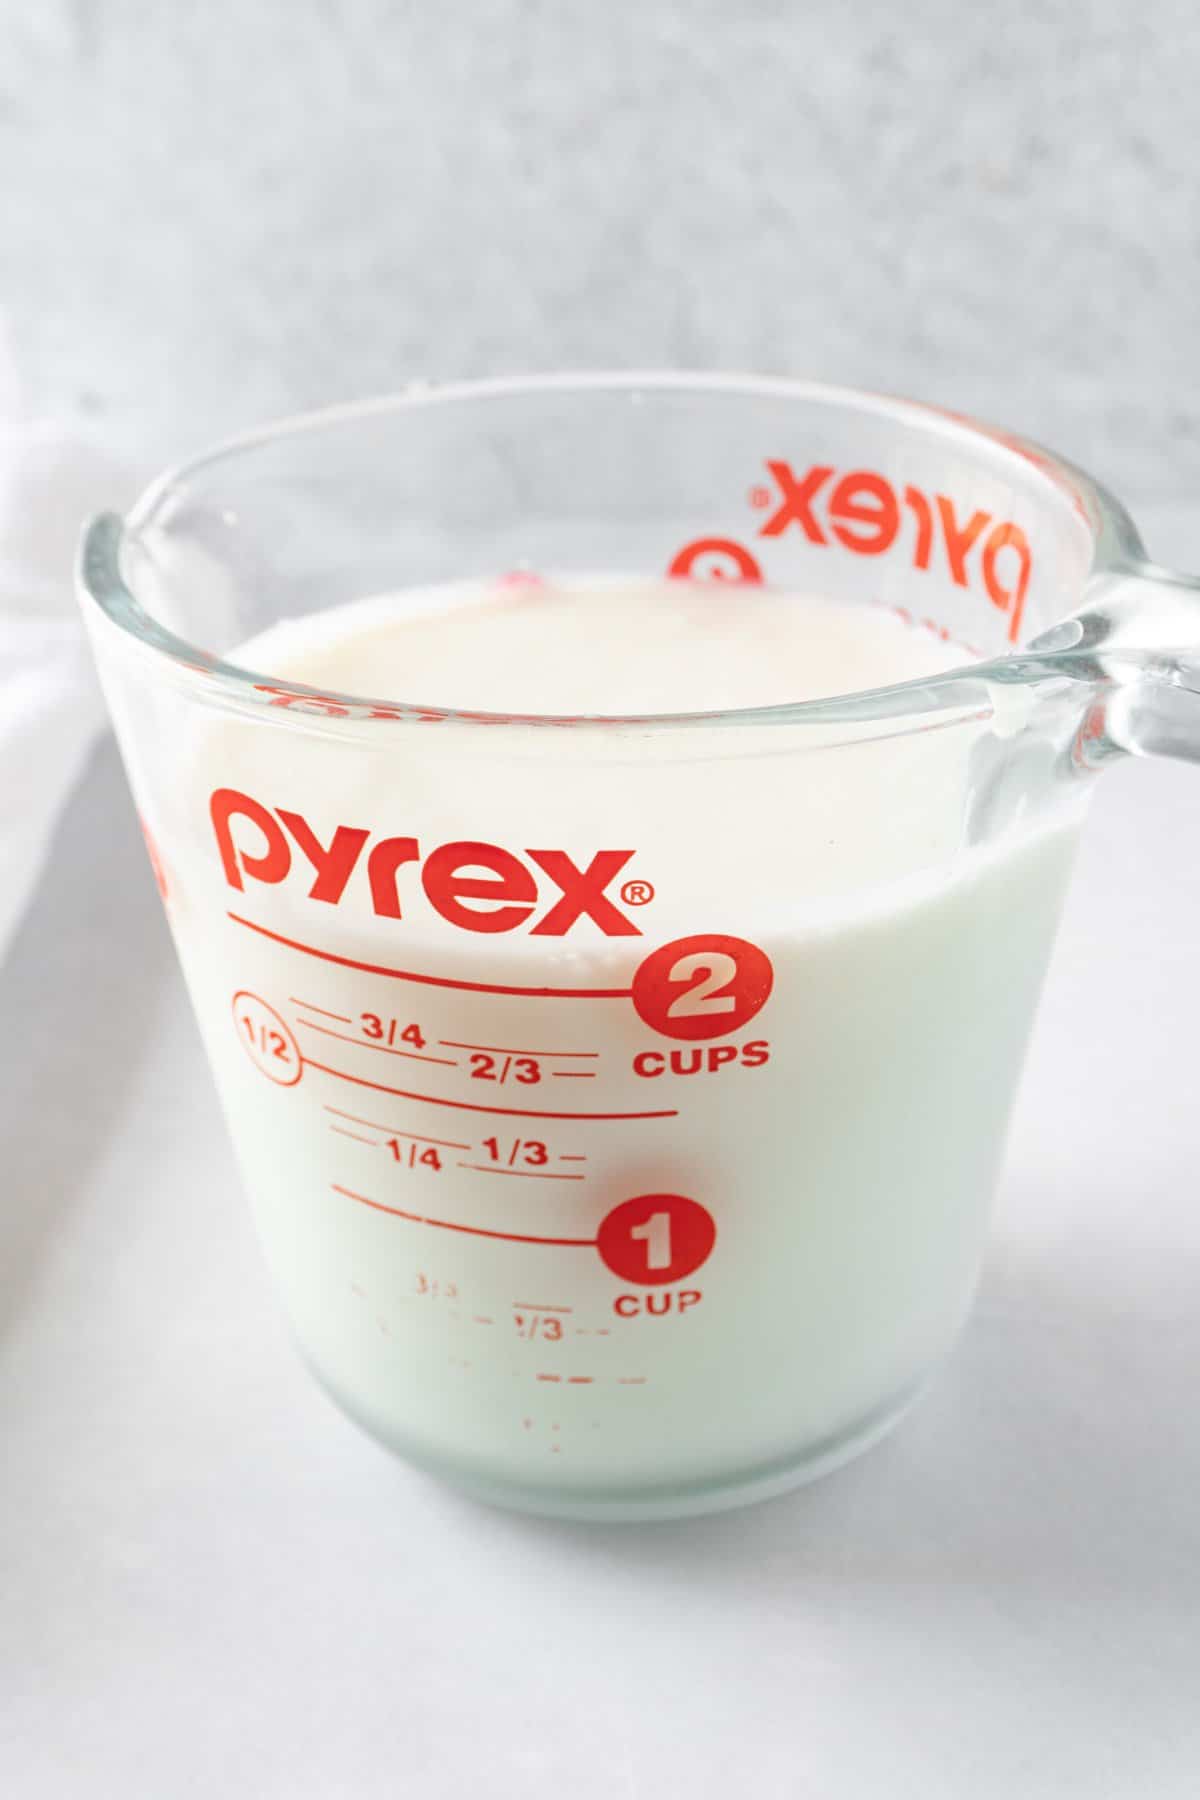 goof buttermilk in a pyrex measuring cup